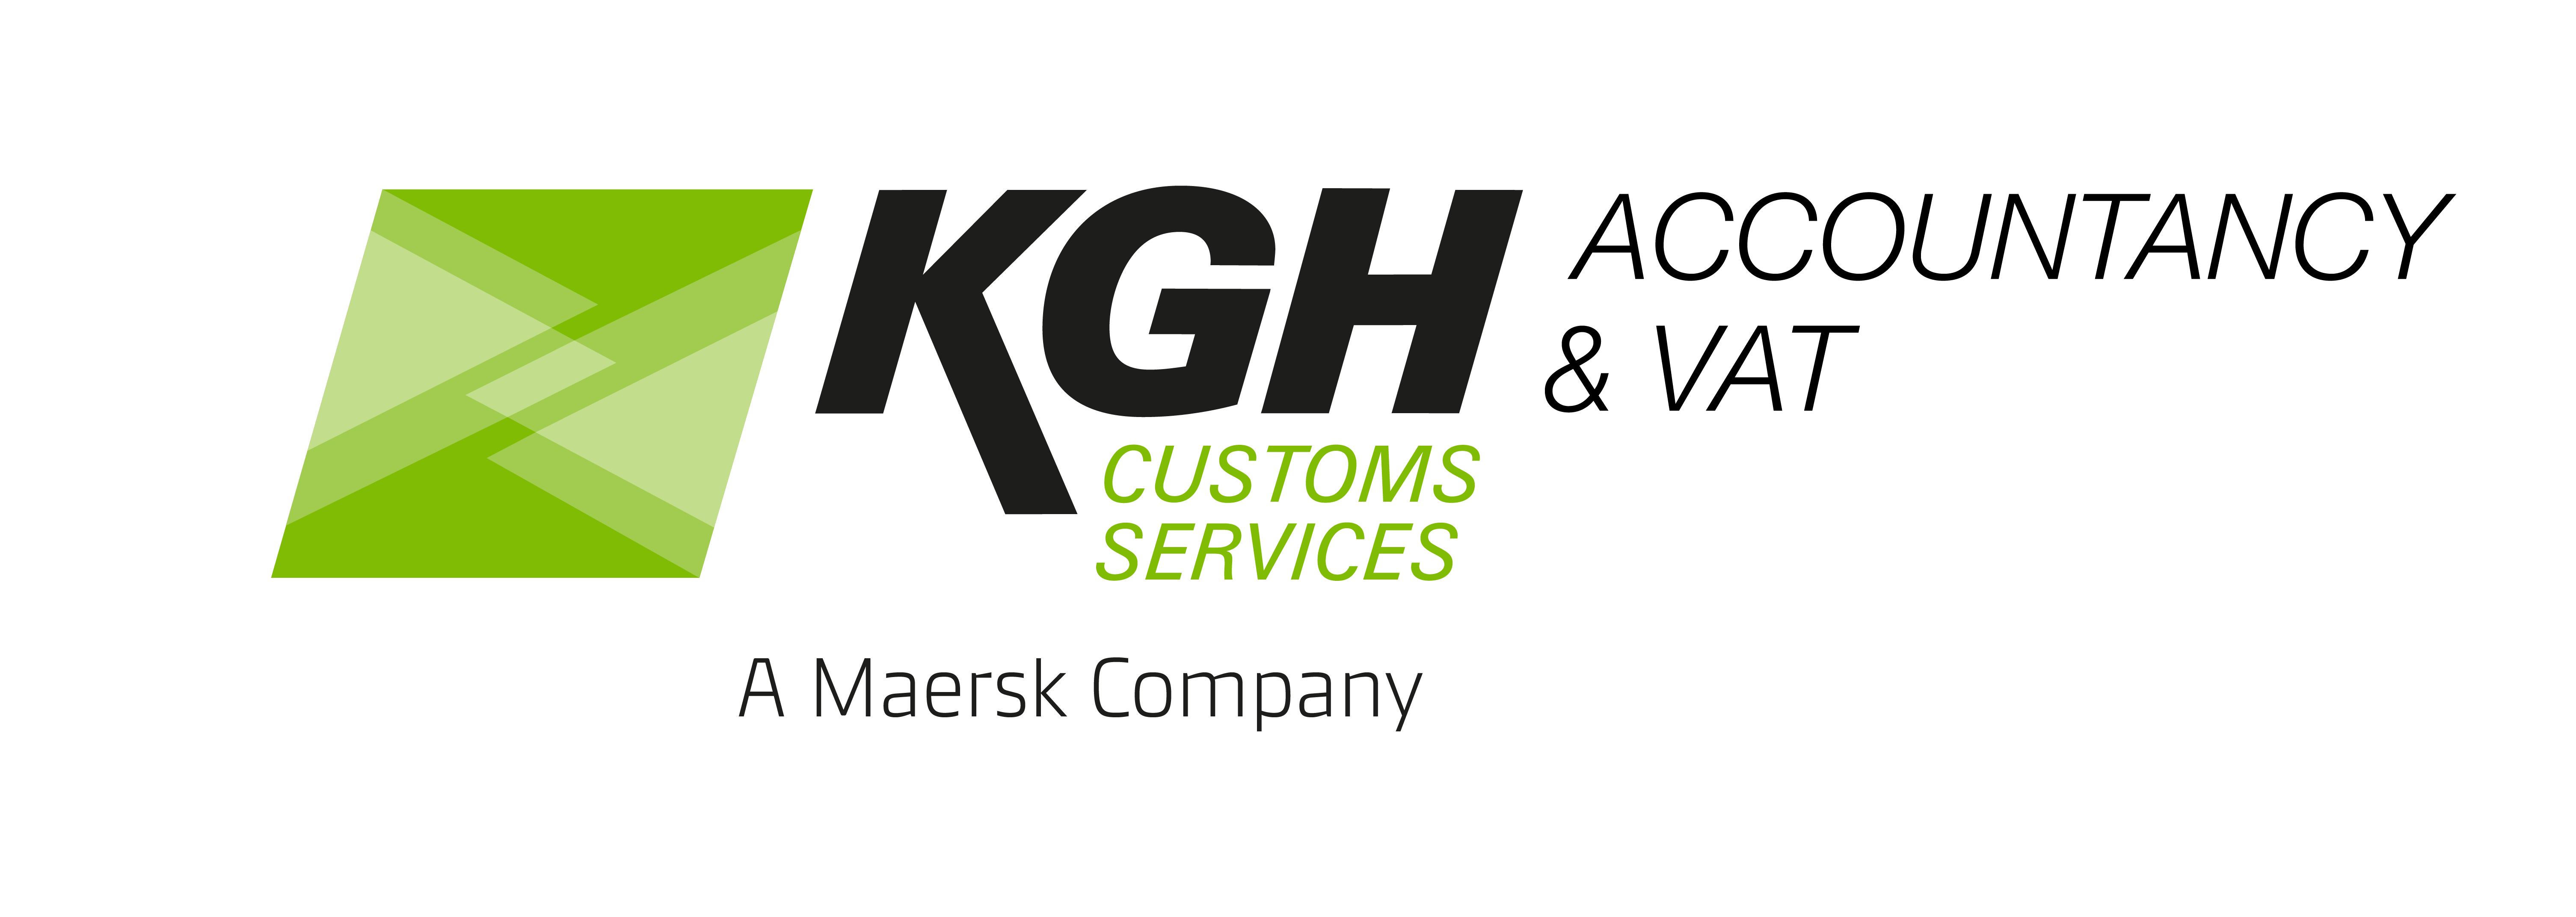 KGH A&V Services